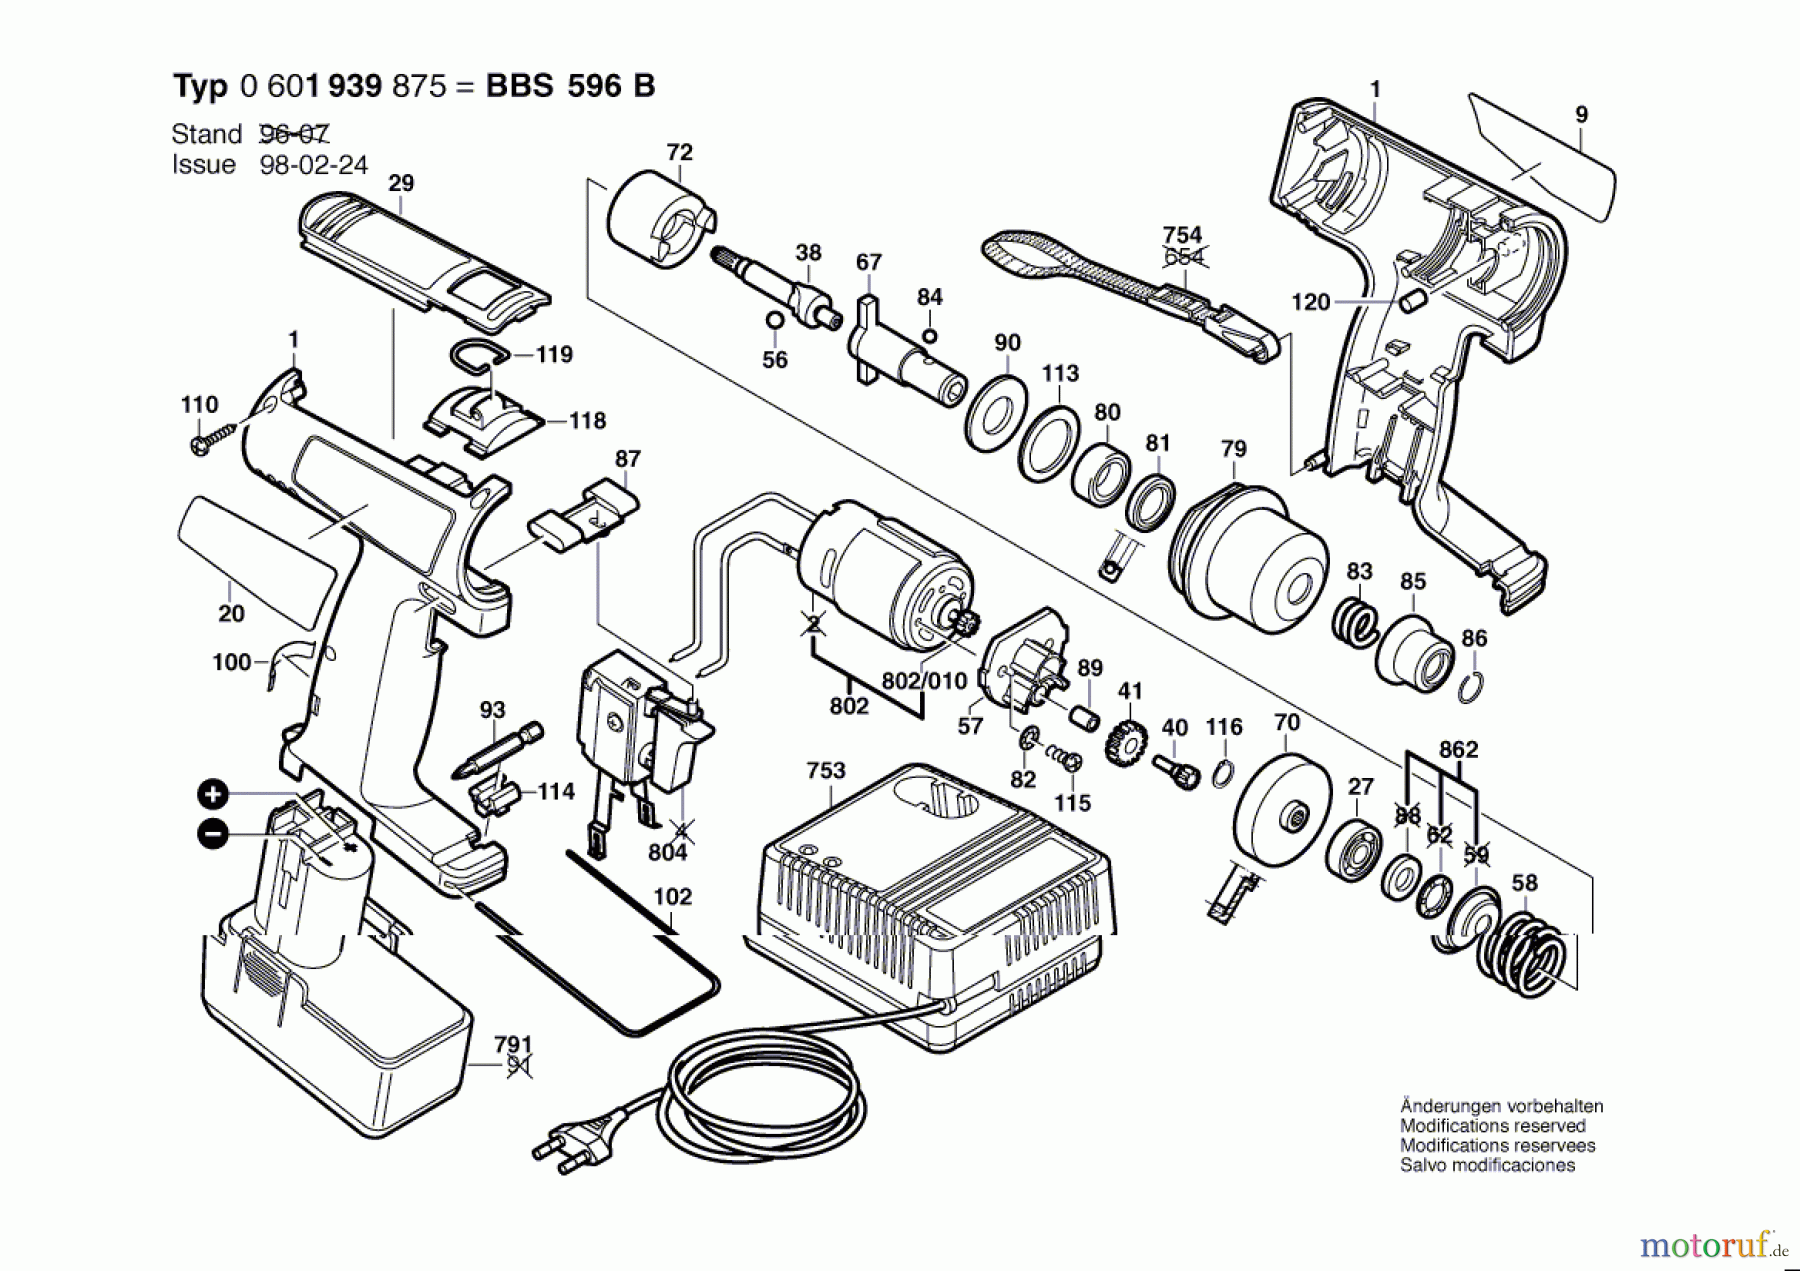  Bosch Akku Werkzeug Akku-Drehschlagschrauber BBS 596 B Seite 1